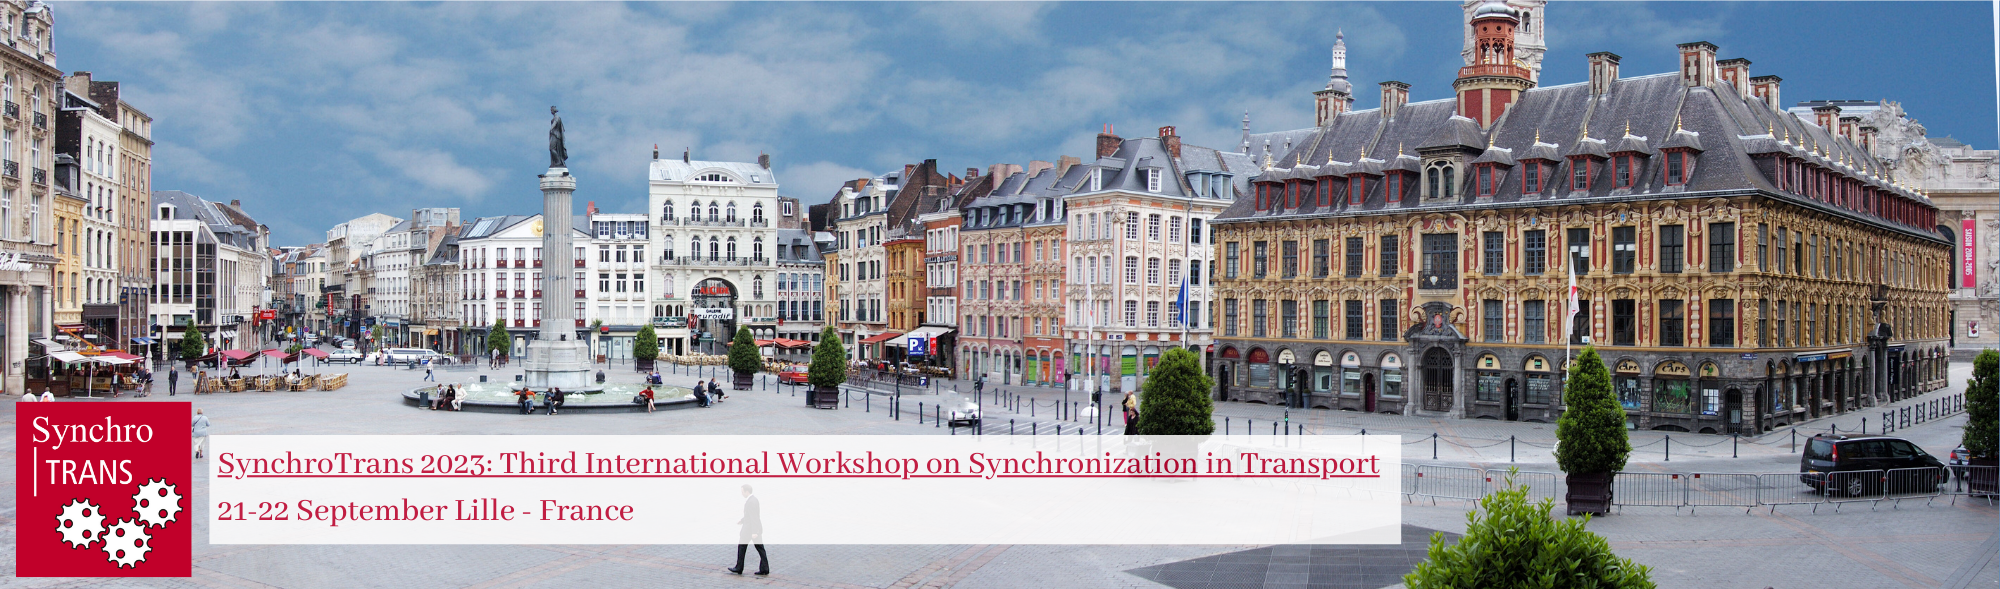 SynchroTrans_2023_Thirs_International_Workshop_on_Synchronization_in_Transport_21_22_September_Lille_France.png